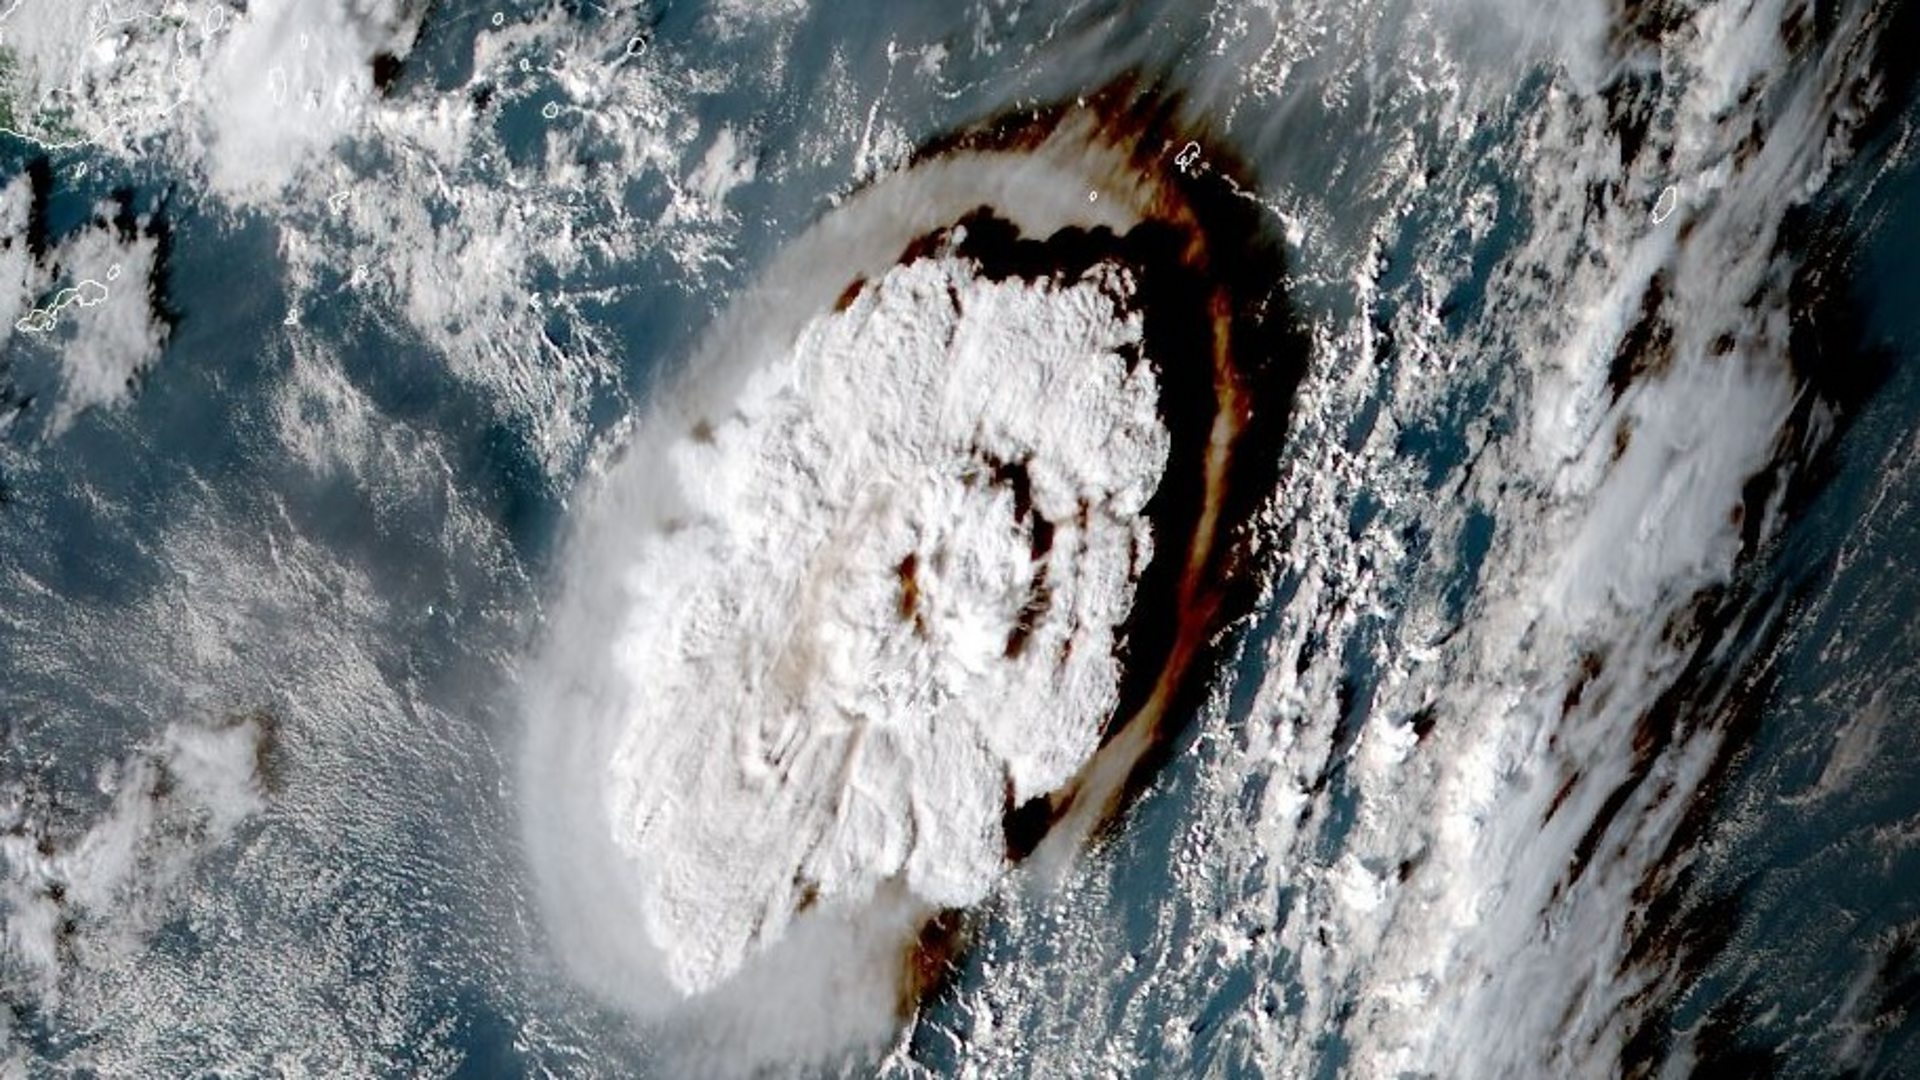 Giant Tonga eruption caught on satellite images